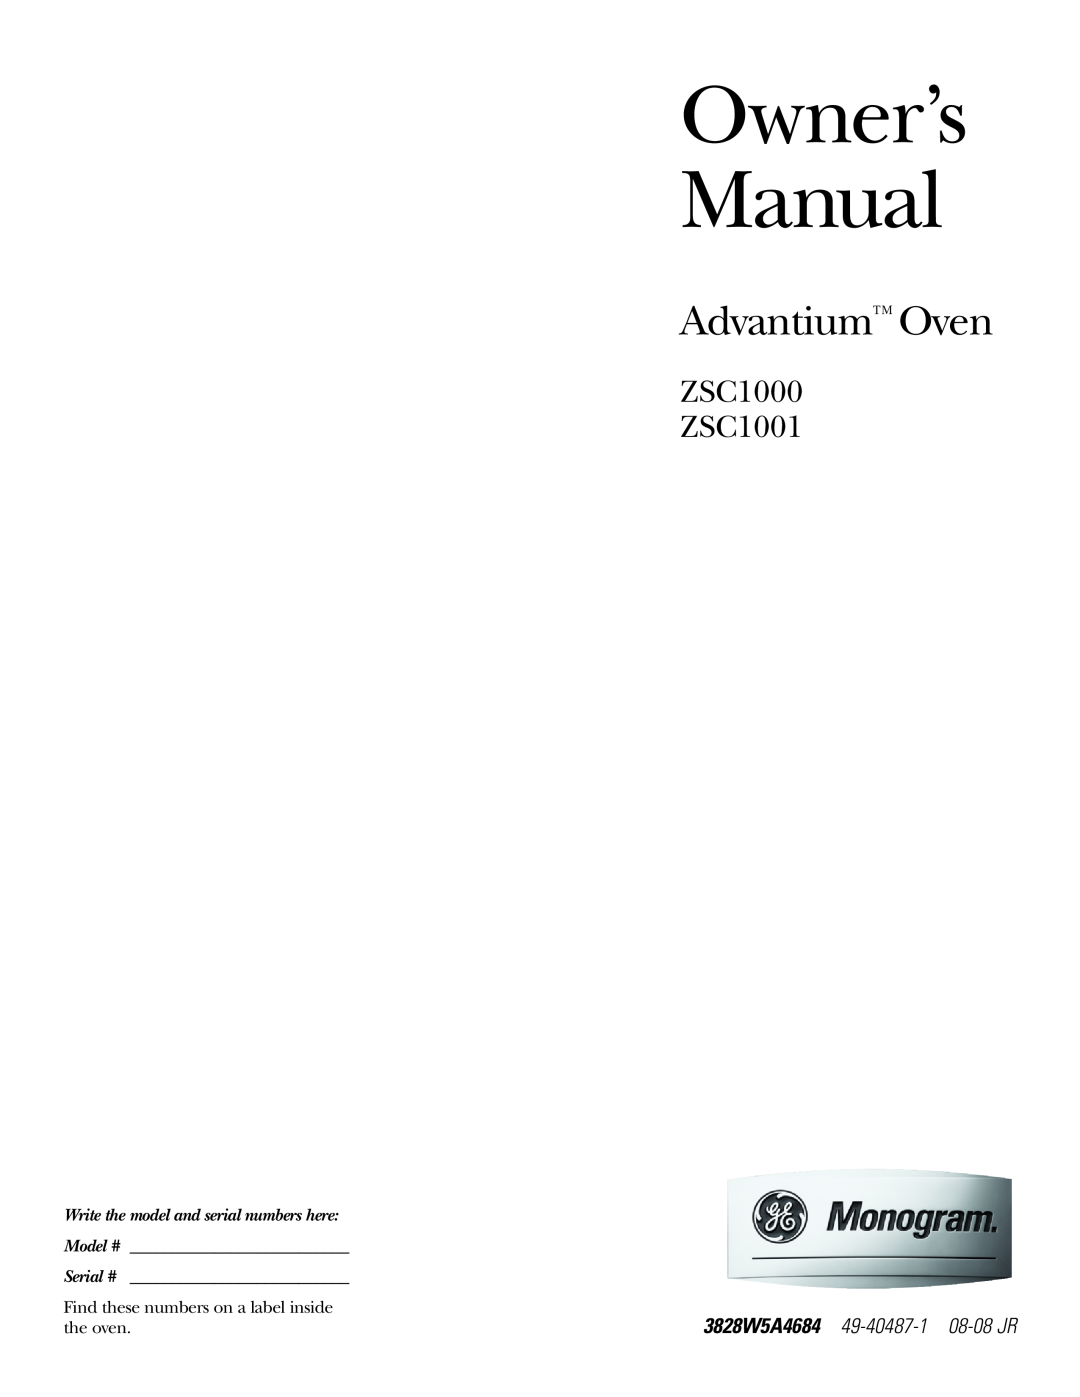 GE owner manual Owner’s Manual, Advantium Oven, ZSC1000 ZSC1001, 3828W5A4684 49-40487-1 08-08 JR, Model # Serial # 